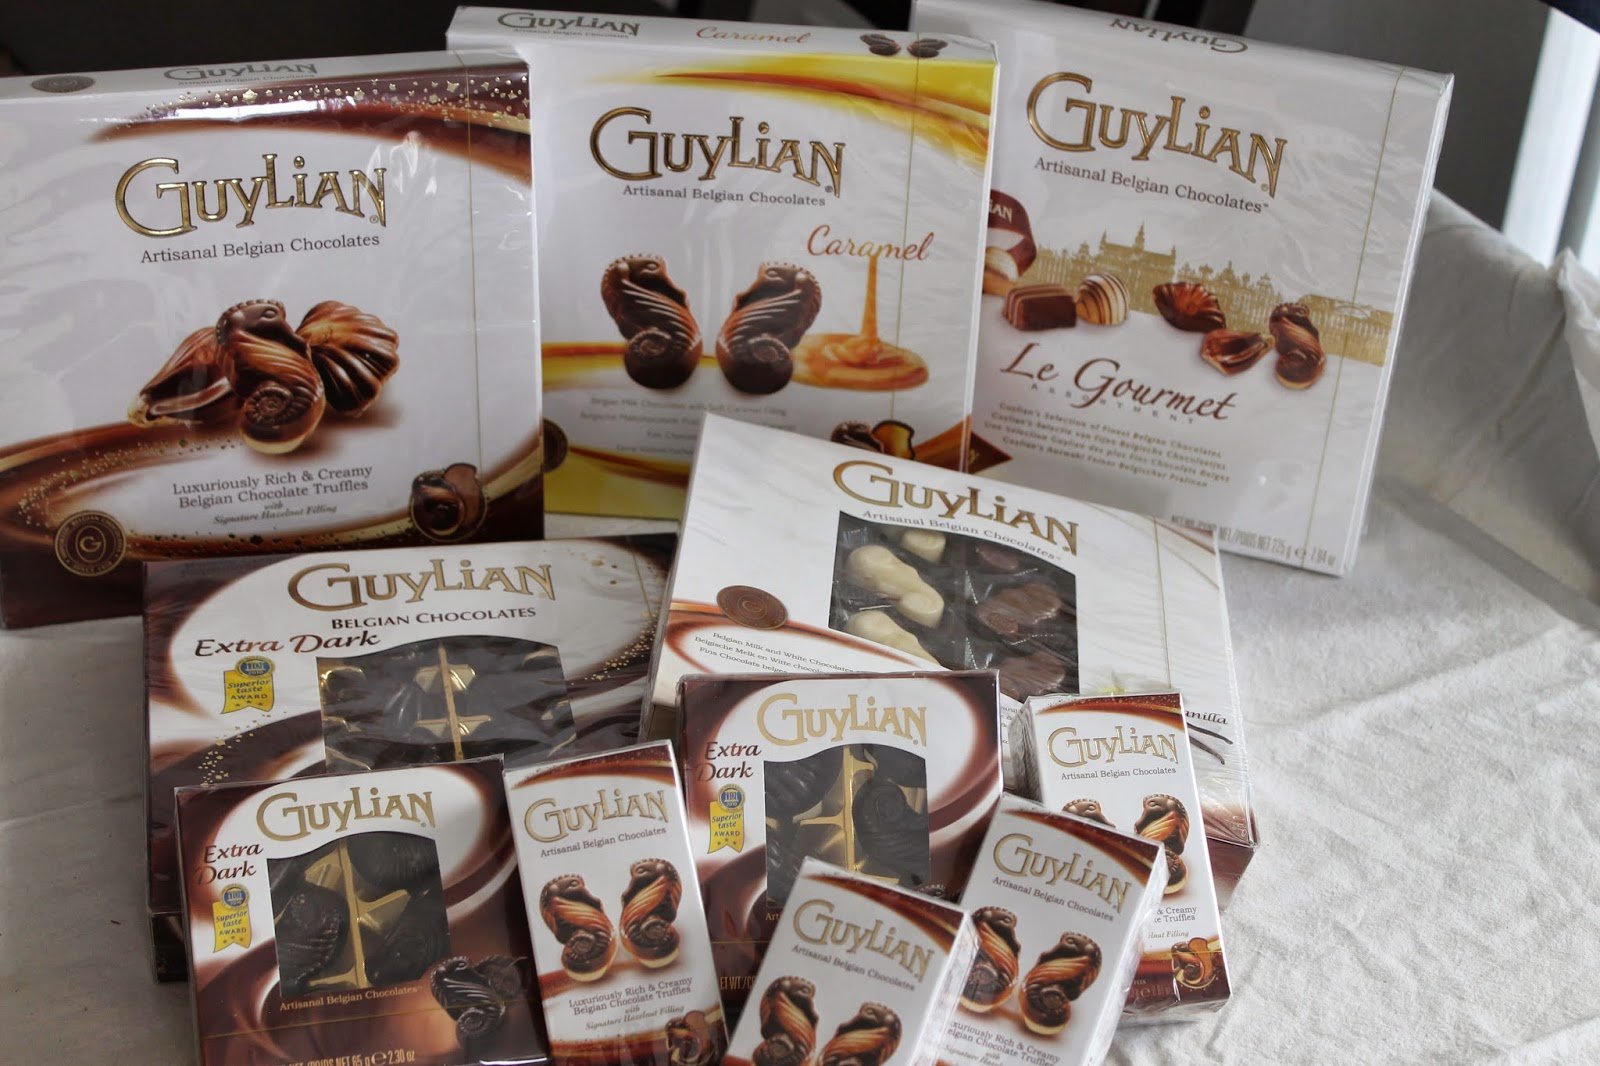 Бельгийский шоколад купить. Бельгийский шоколад марки. Бельгийский шоколад бренды. Название шоколада бельгийского. Guylian artisanal Belgian Chocolate.